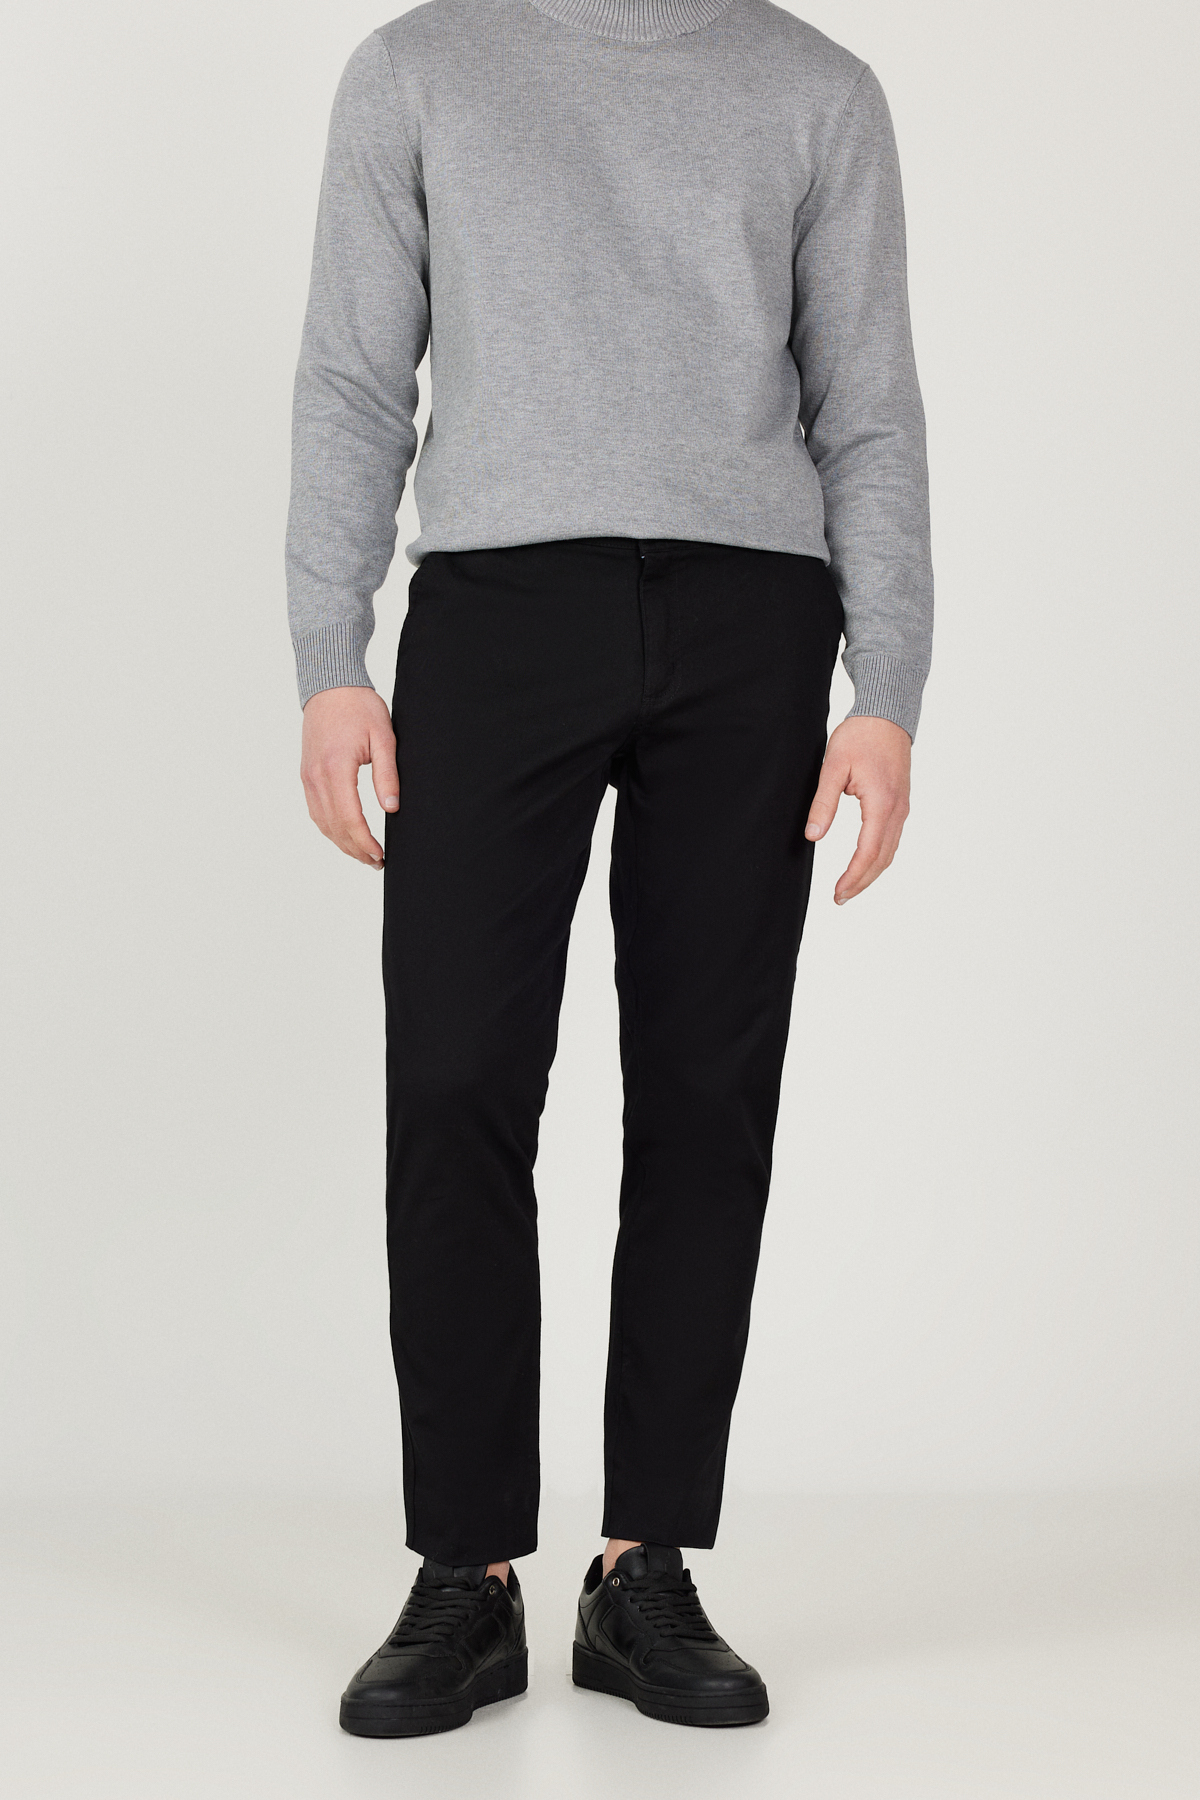 ALTINYILDIZ CLASSICS Men's Black Slim Fit Slim Fit Cotton Flexible Chino Trousers.